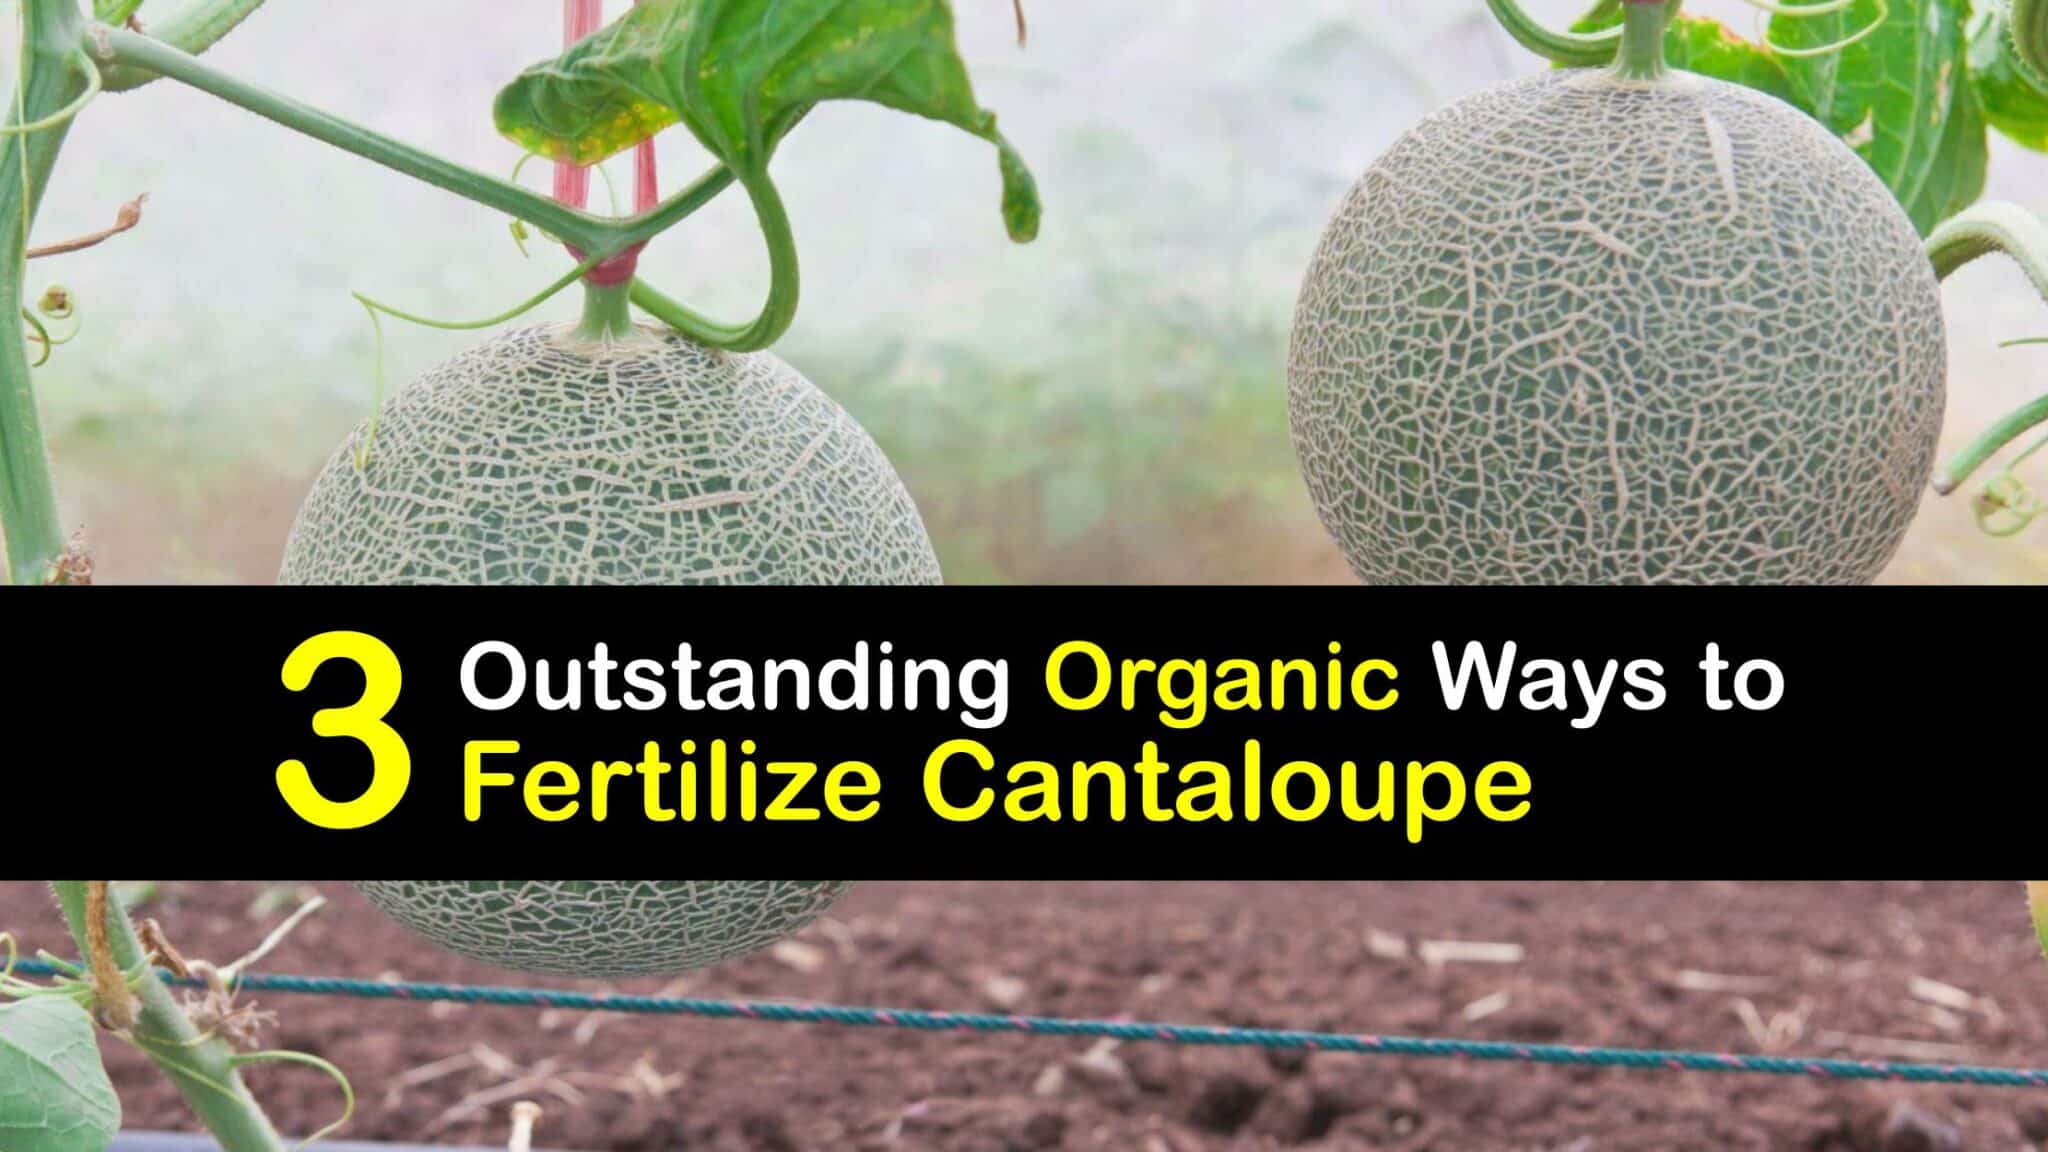 Feeding Cantaloupe Plants - Organic Fertilizers for Cantaloupe